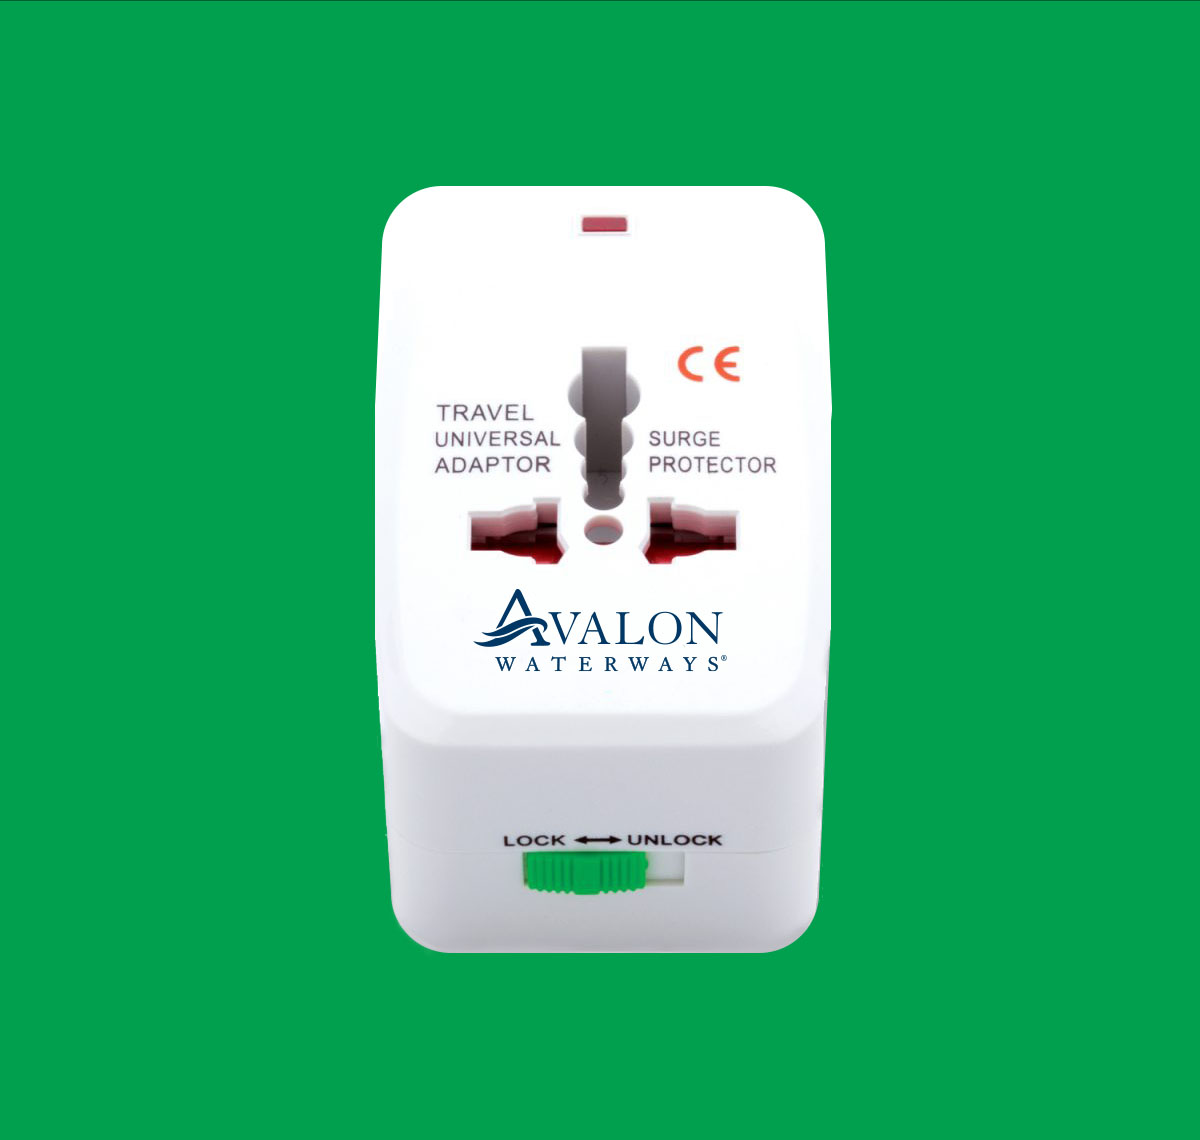 Avalon Travel Adapter